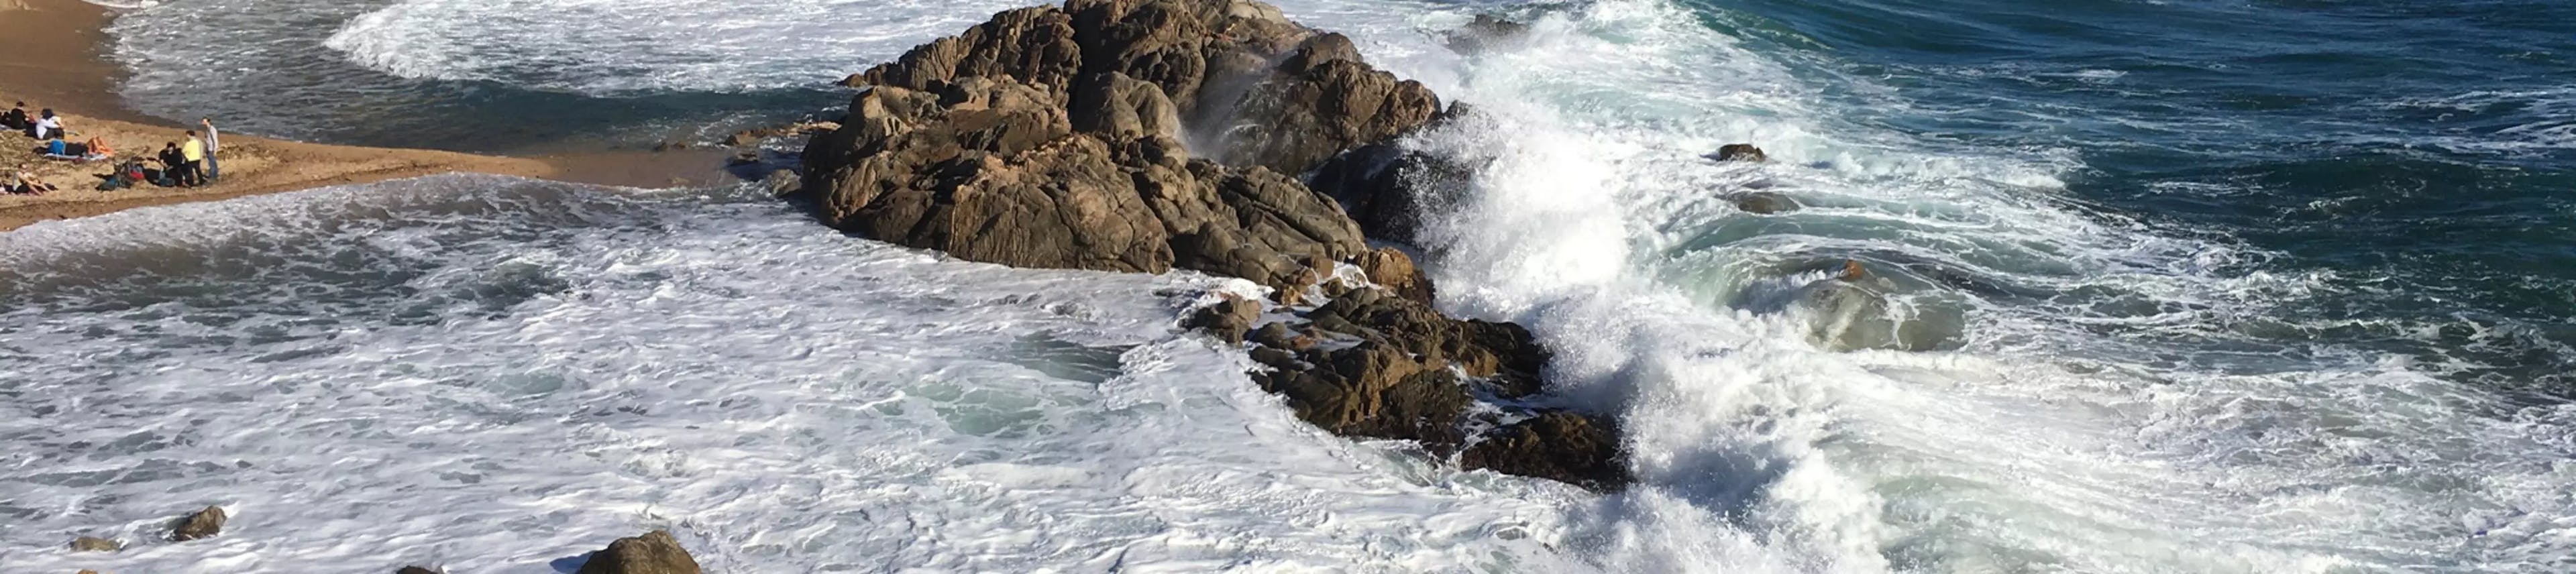 Dynamic coastal environment with waves crashing